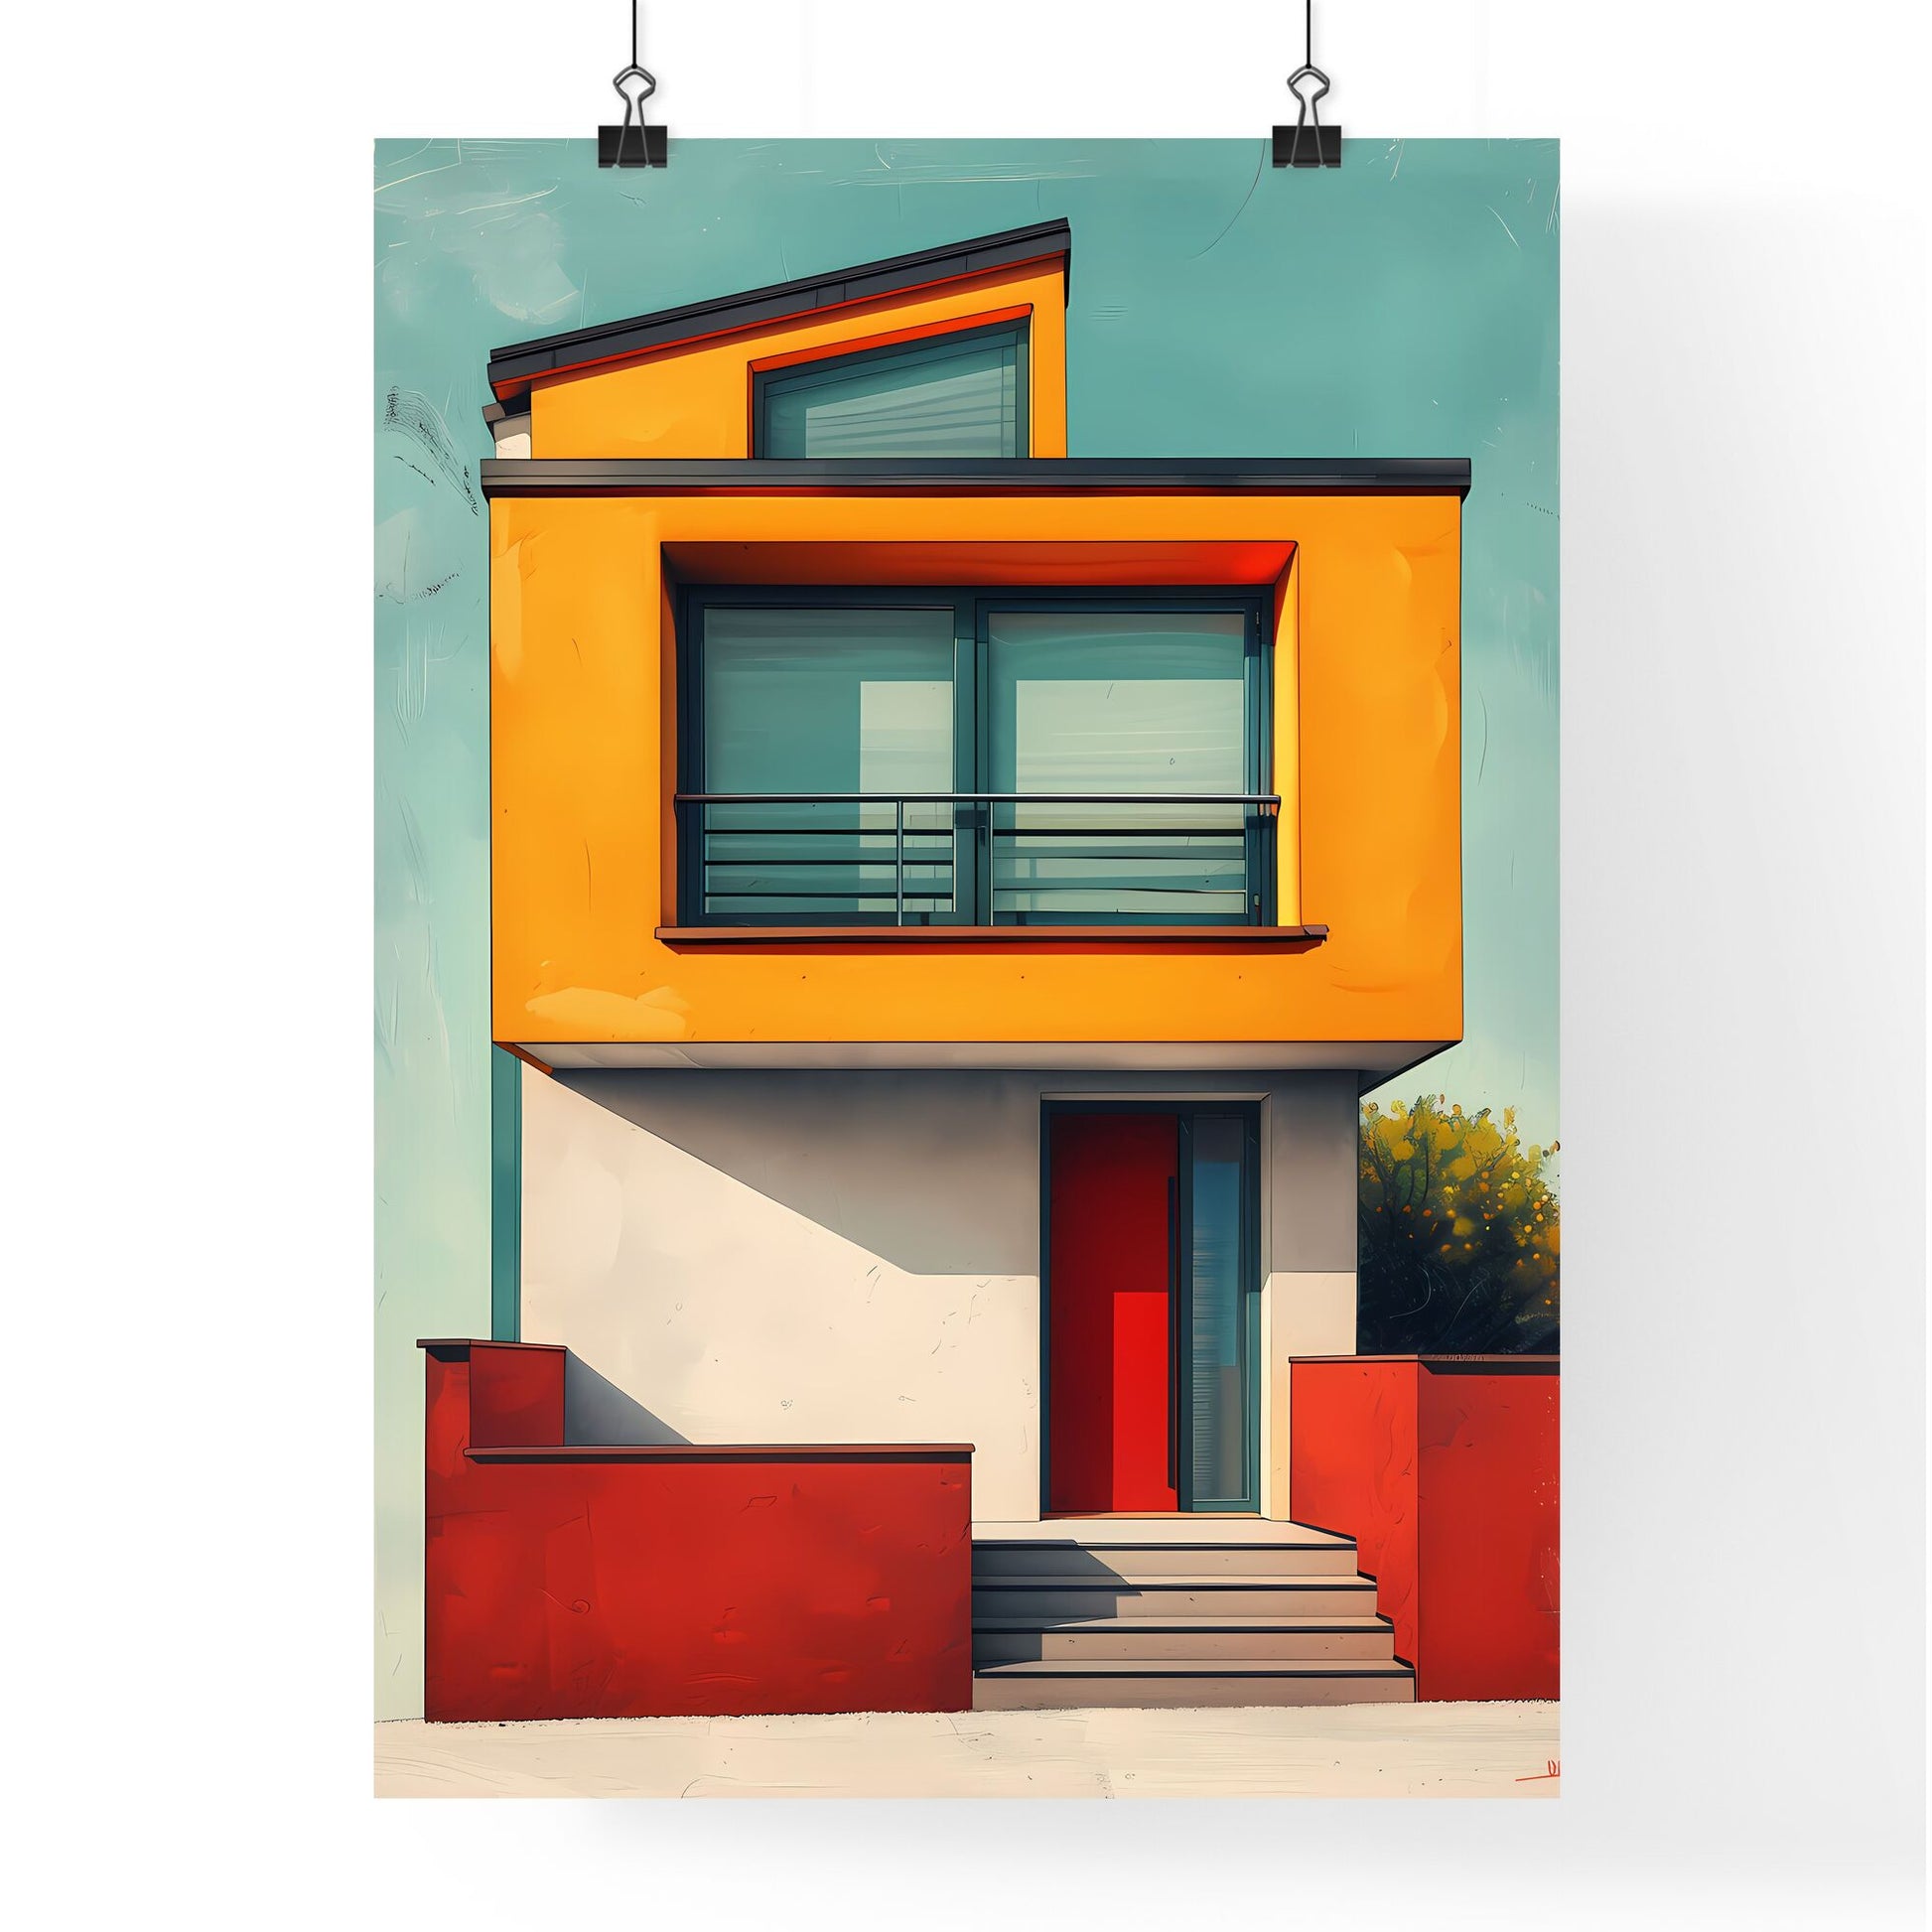 Vibrant Bauhaus Art Print: Minimalist Geometric Yellow House with Red Door Default Title